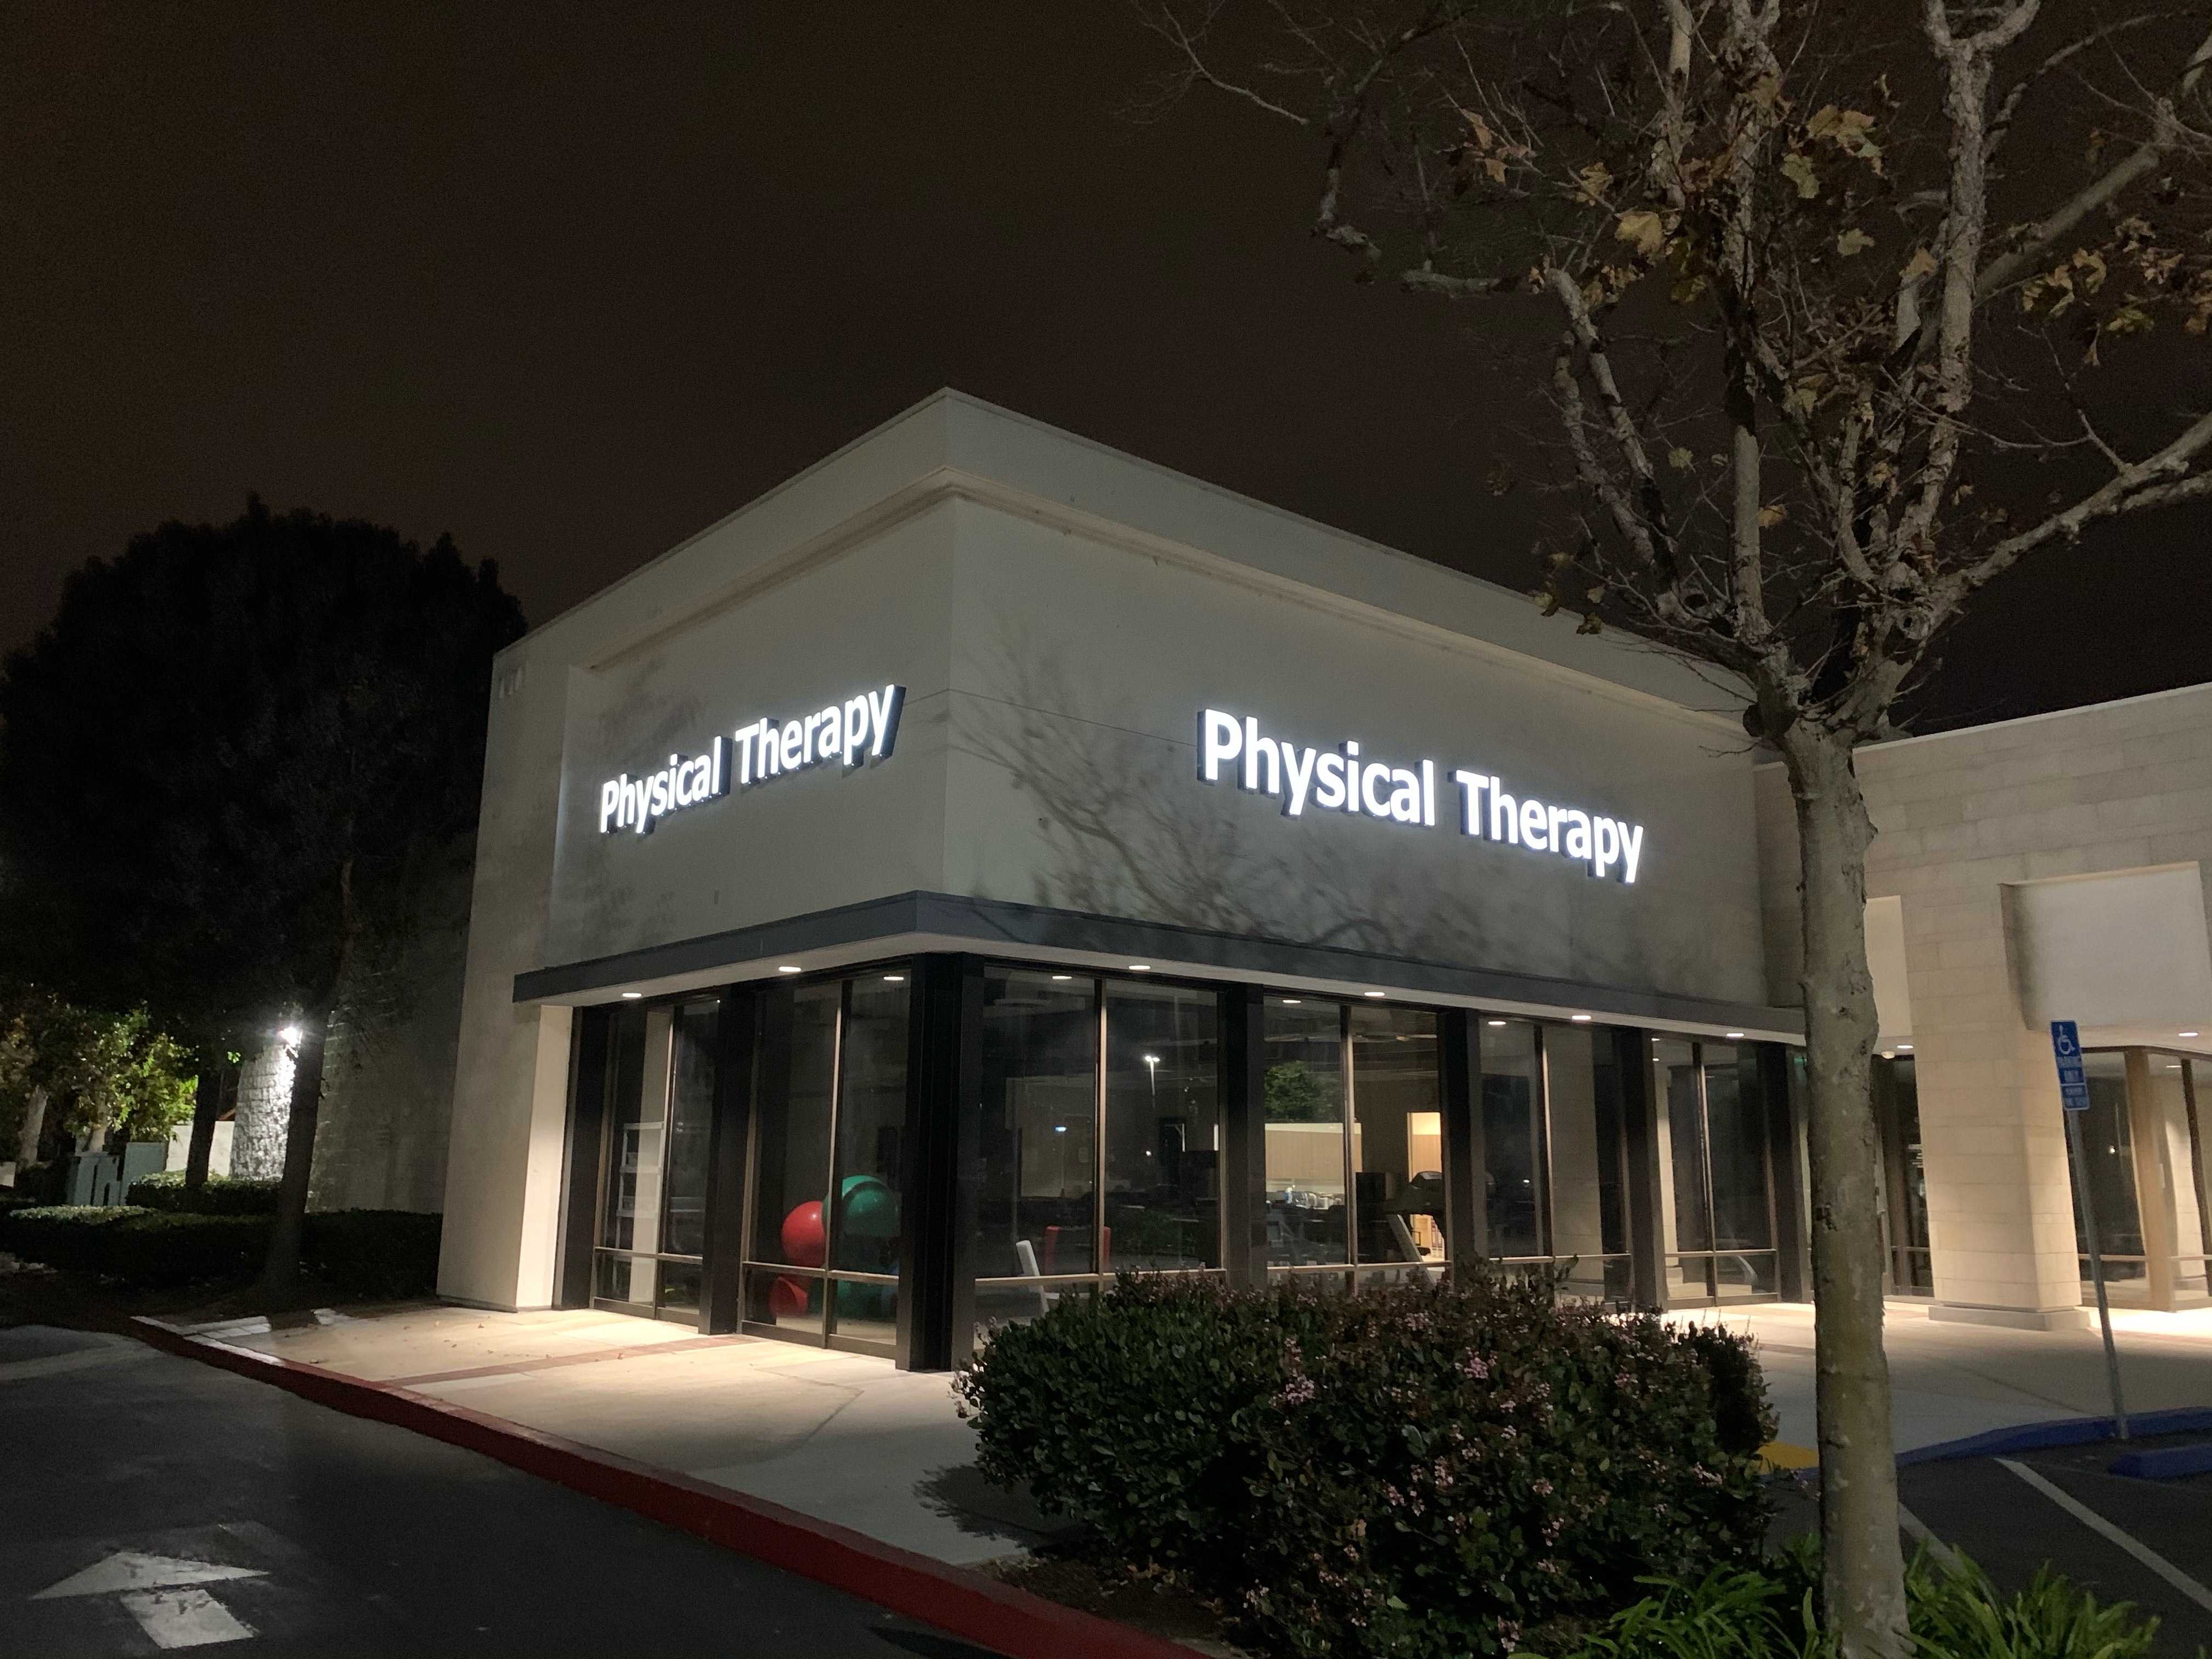 California Rehabilitation and Sports Therapy
7071 Warner Ave
Huntington Beach